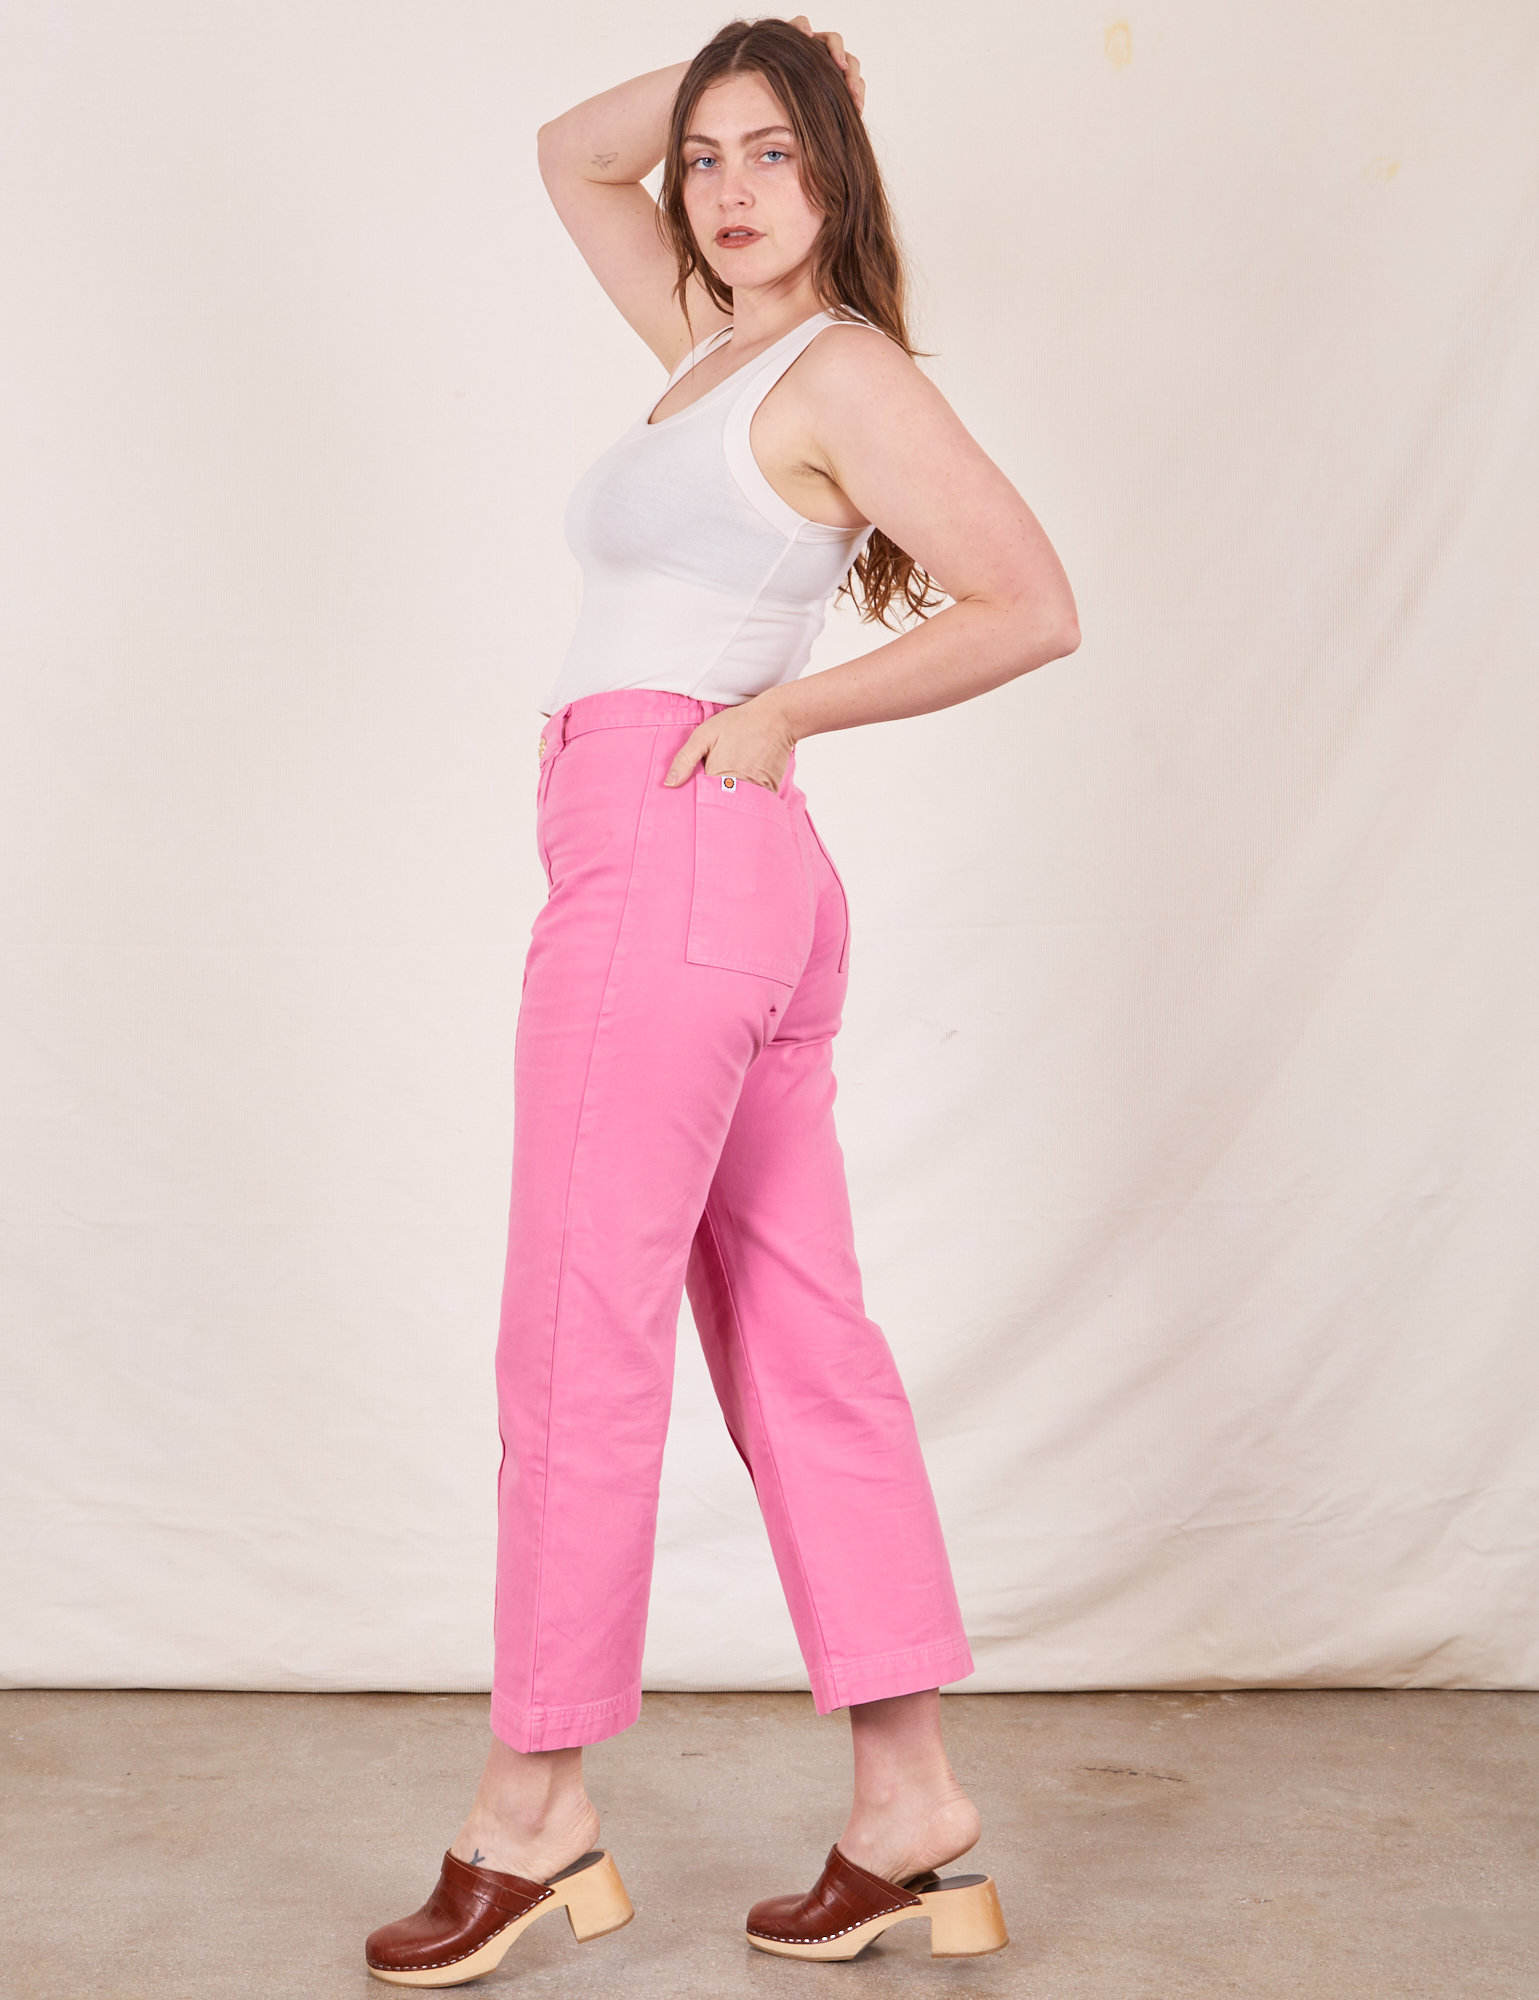 Western Pants in Bubblegum Pink side view on Allison wearing Tank Top in vintage tee off-white